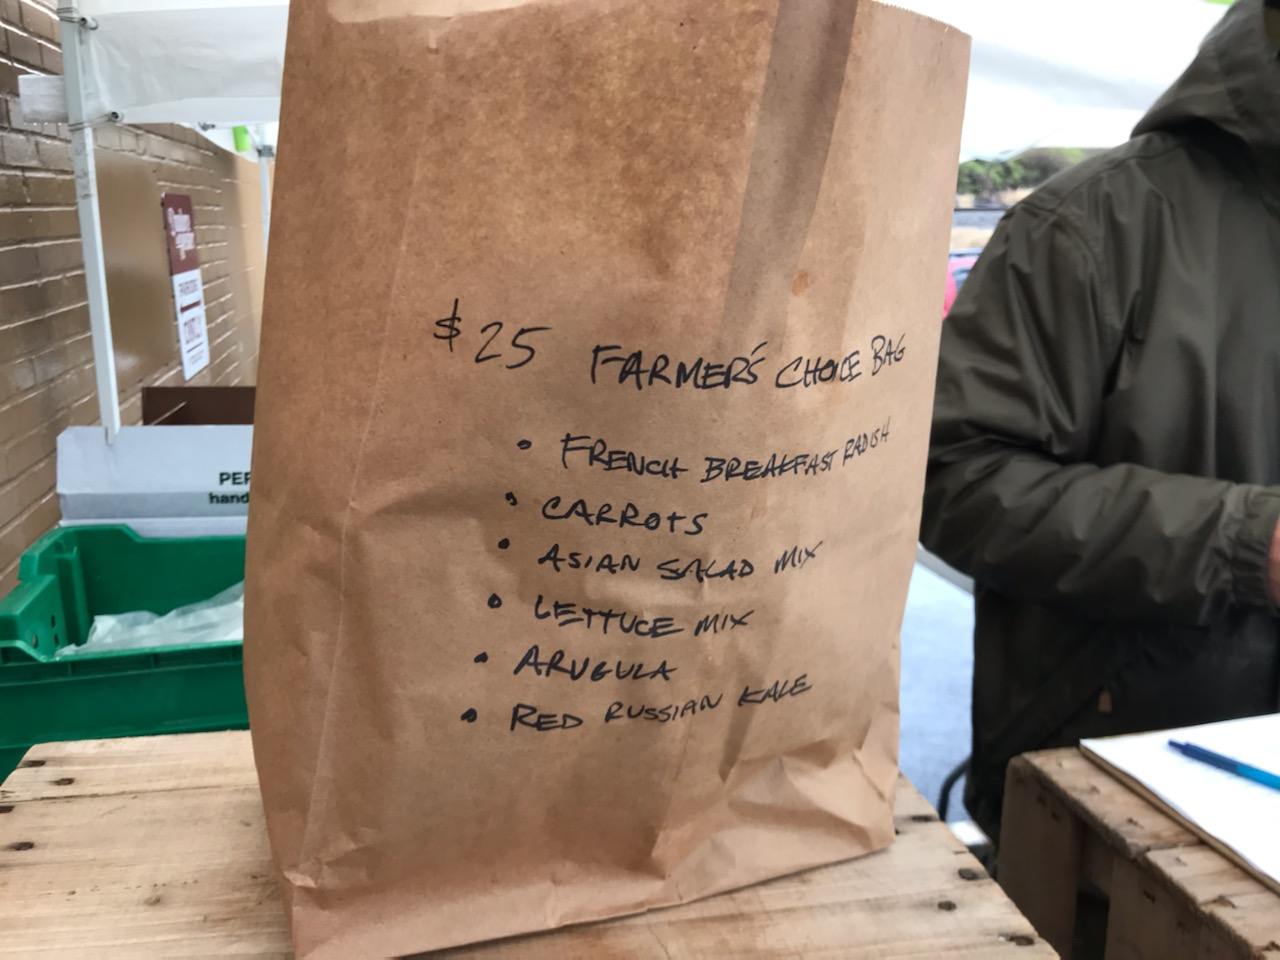 Dundore and Heister bag of farmer's choice for 25 dollars April-2020